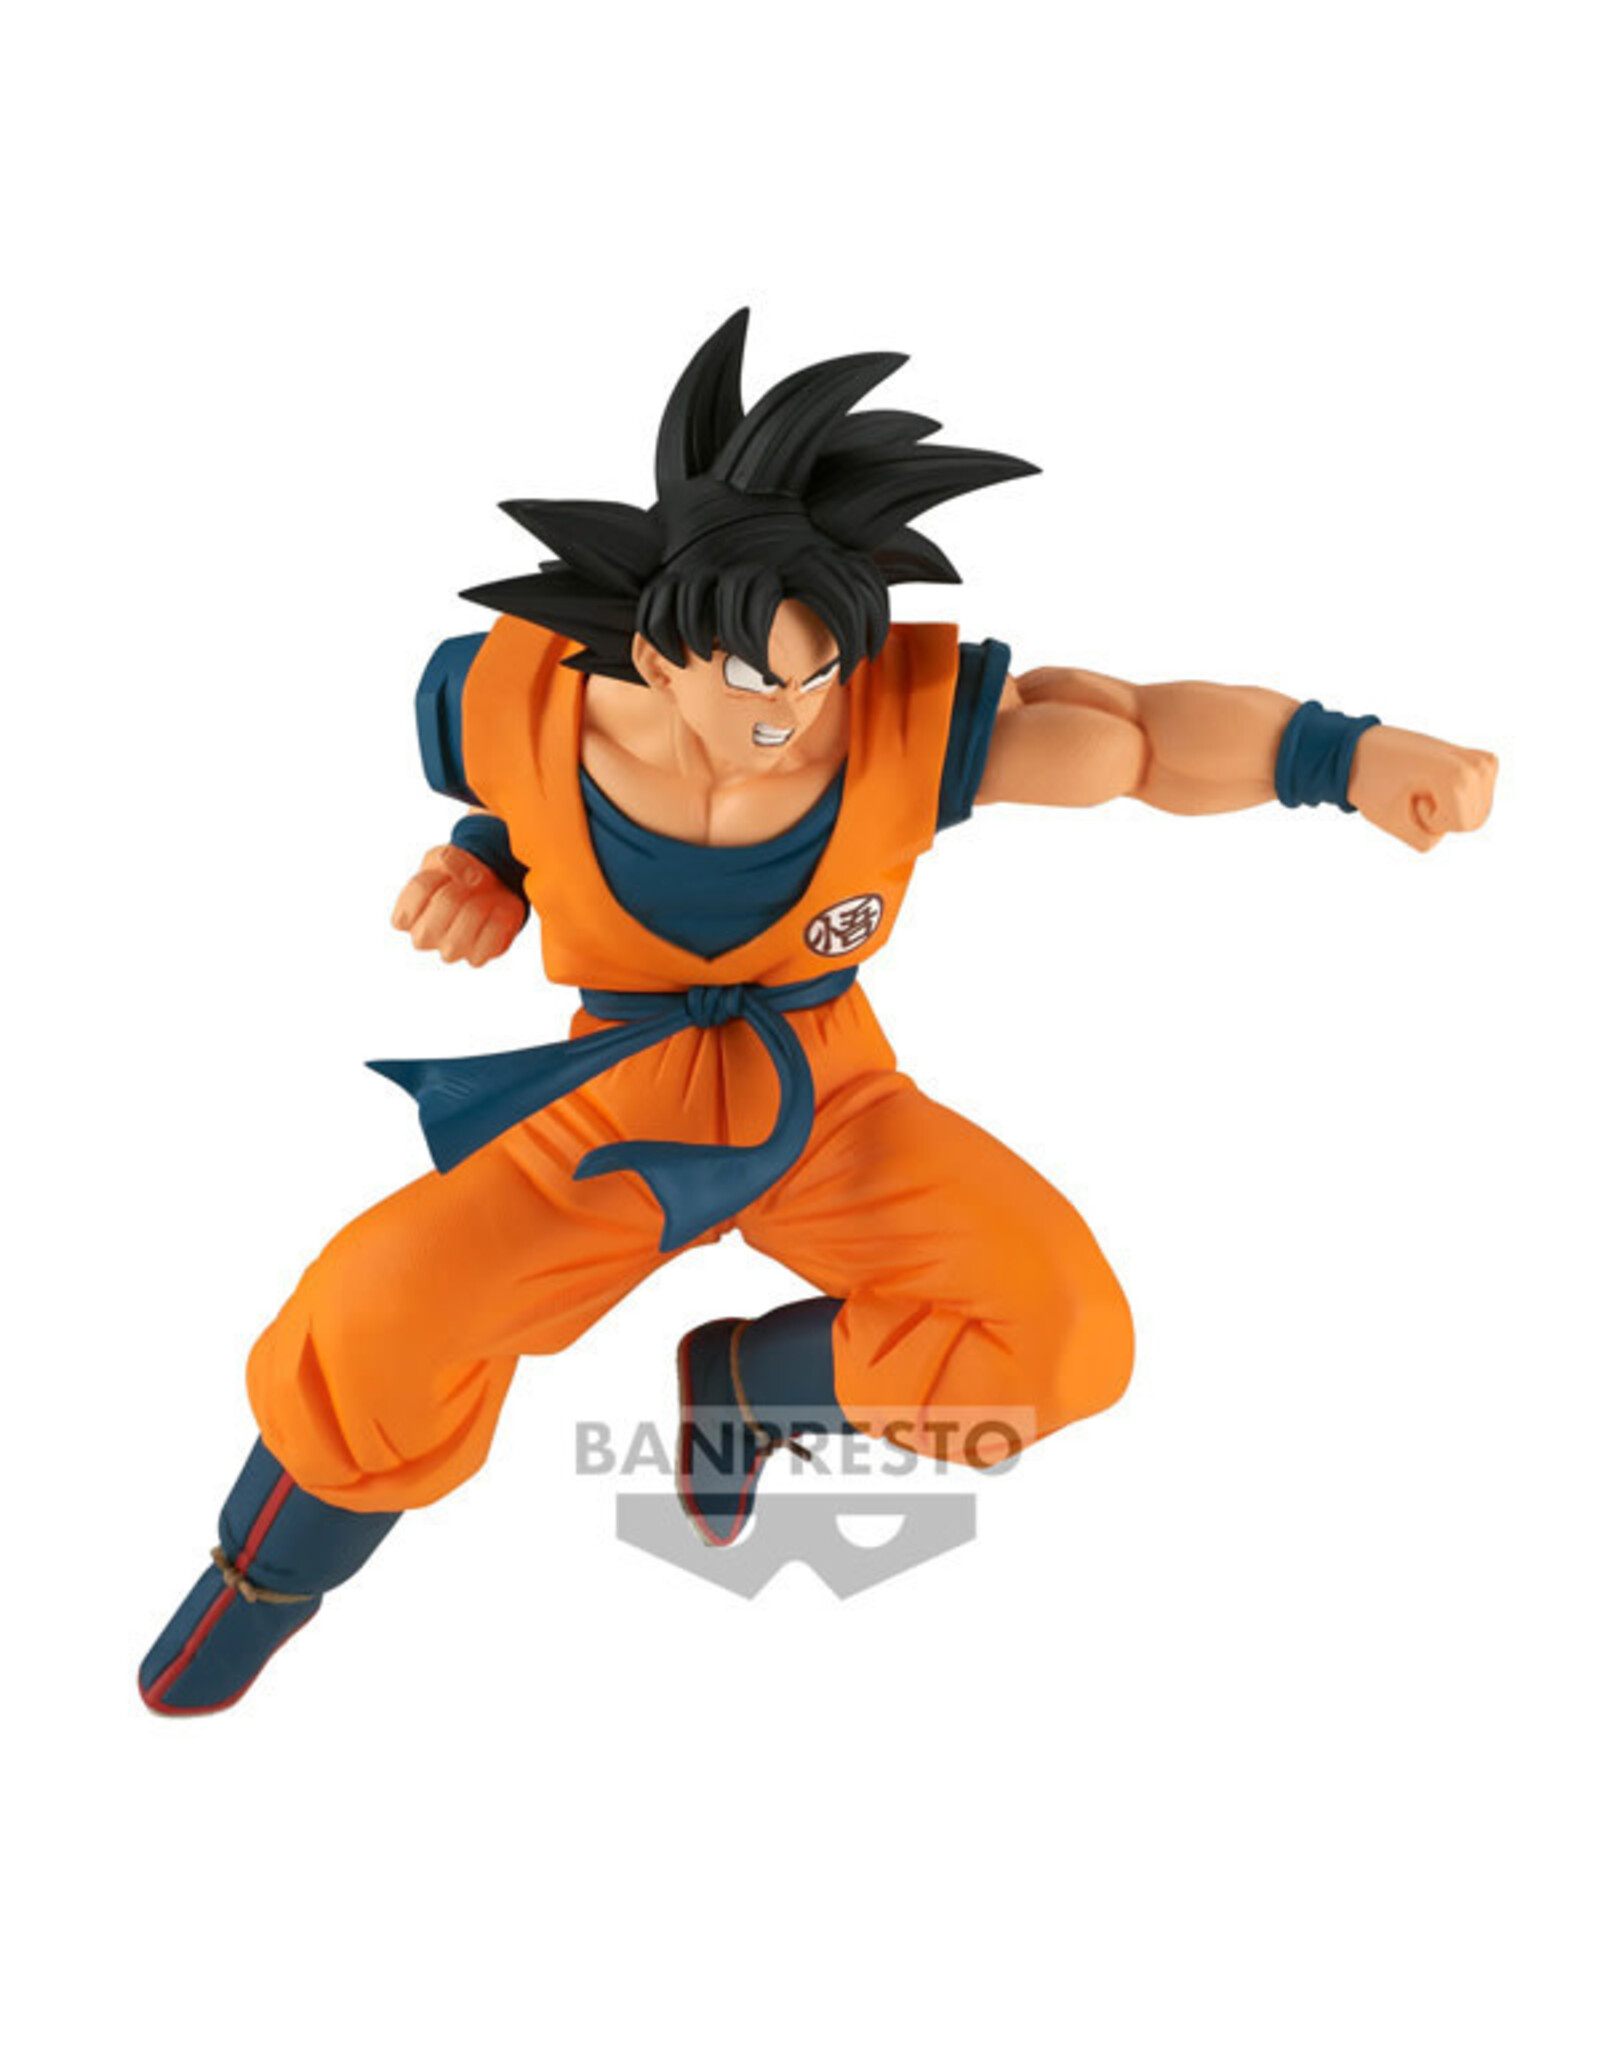 Banpresto Banpresto - Dragon Ball Super Hero Match Makers - Son Goku 5.5" Figure